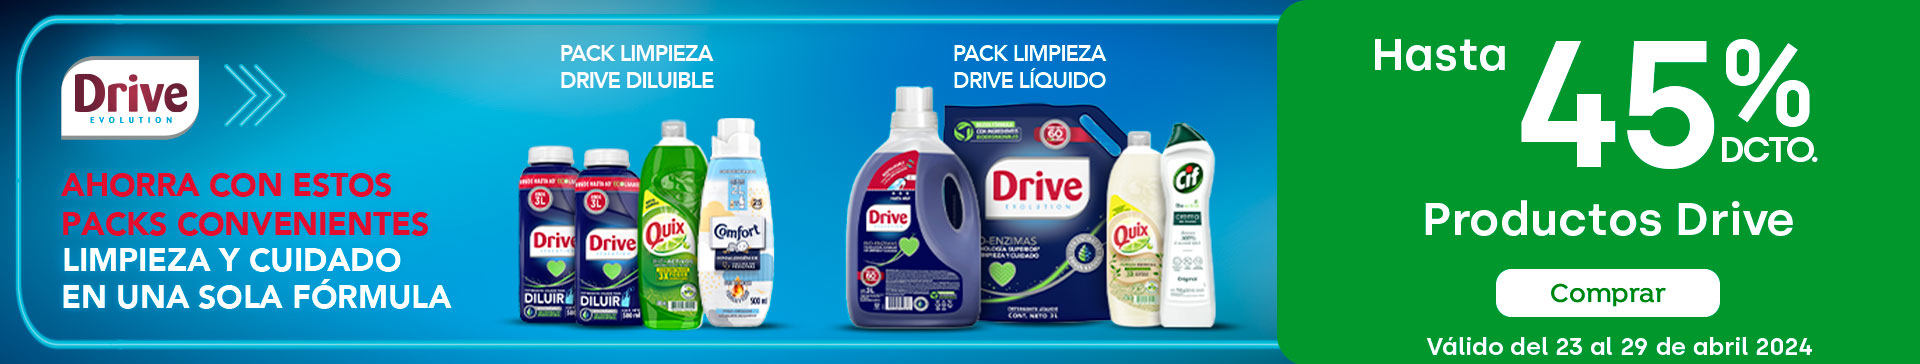 Banner ppal proveedor - Unilever - Drive hasta 45% descto - 23-04-2024 al 29-04-2024